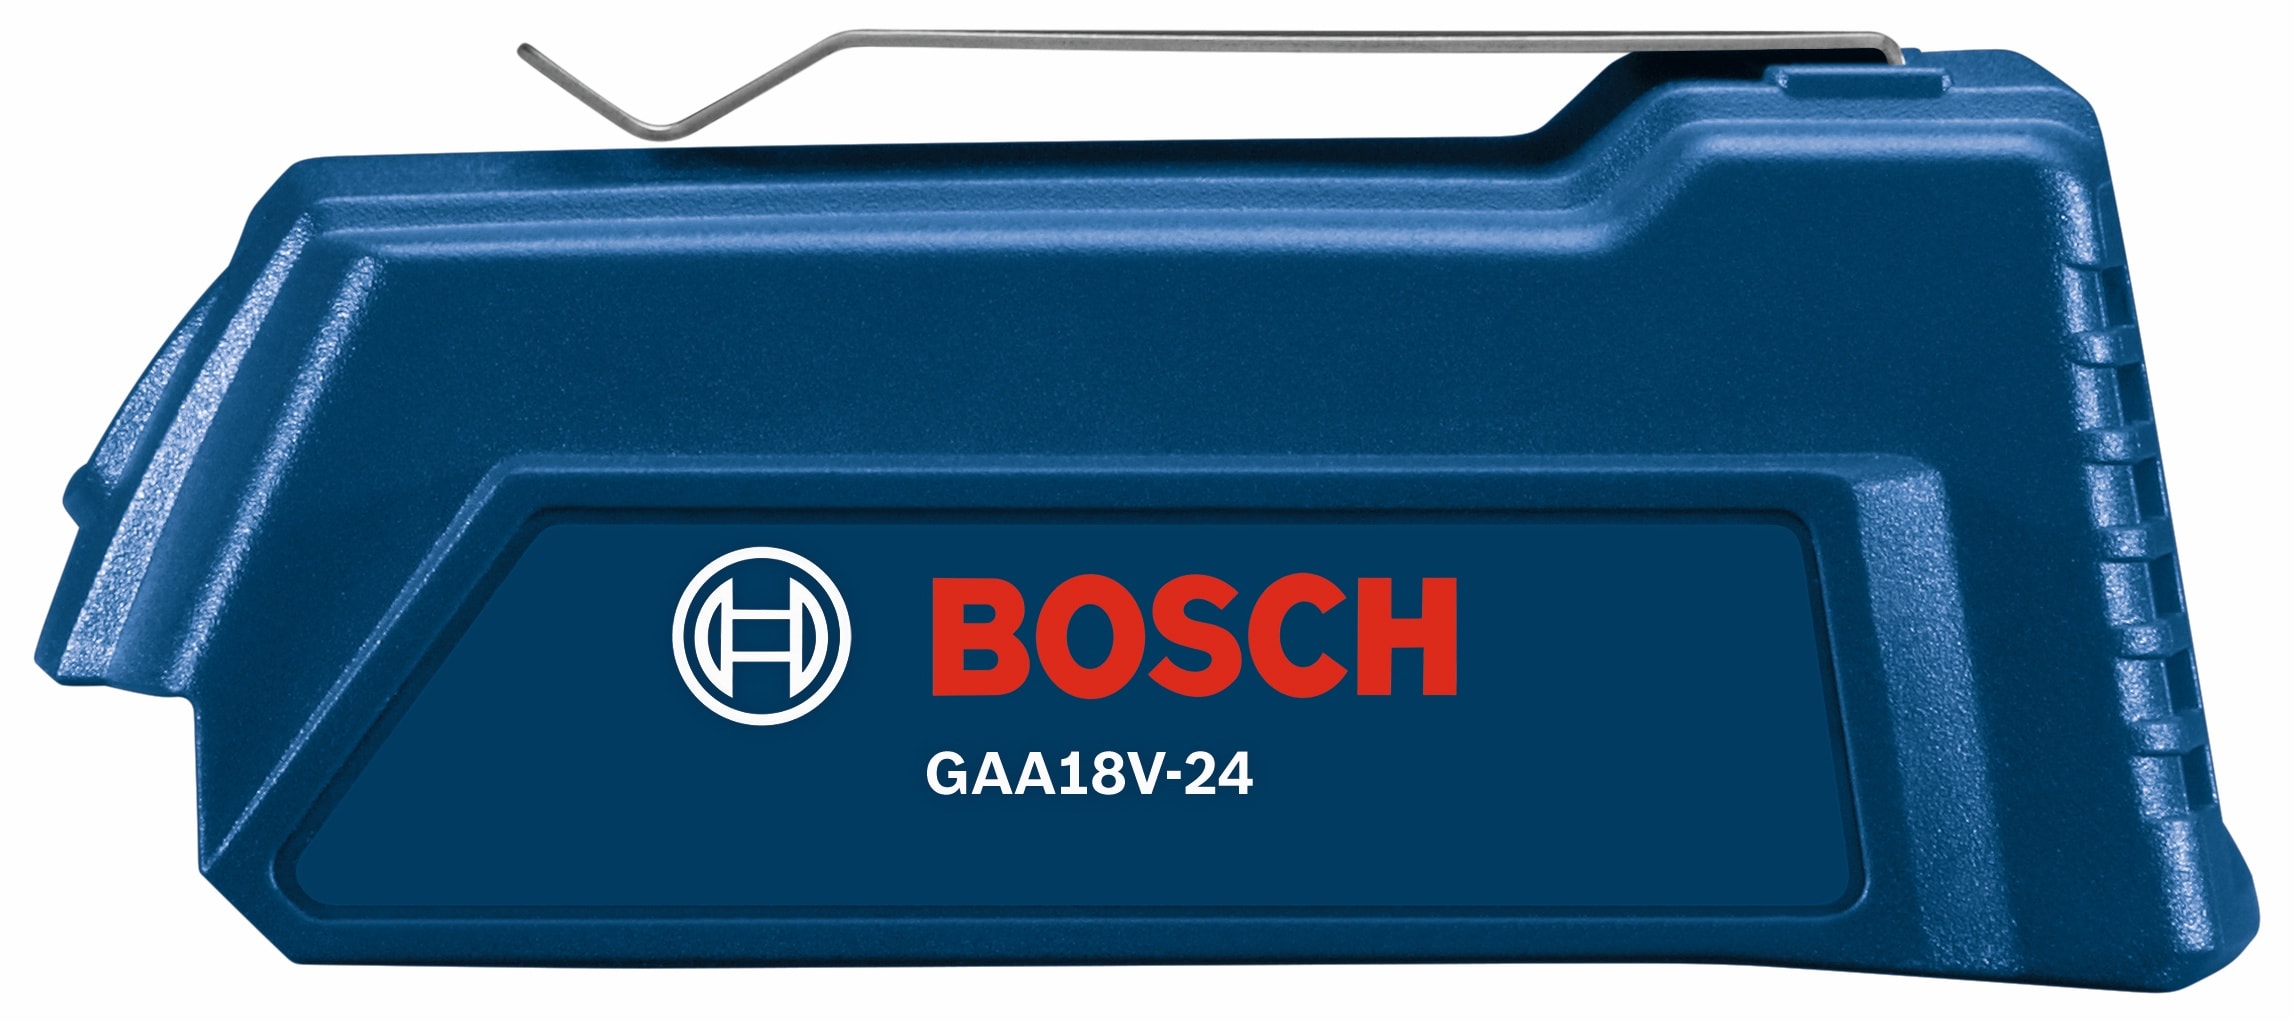 Bosch Home and Garden Battery Pack PBA 18V (battery 2.5 Ah W-B, 18 Volt  System, in carton packaging) & Home and Garden Charger AL 1830 CV (18 Volt  System, in carton packaging) 